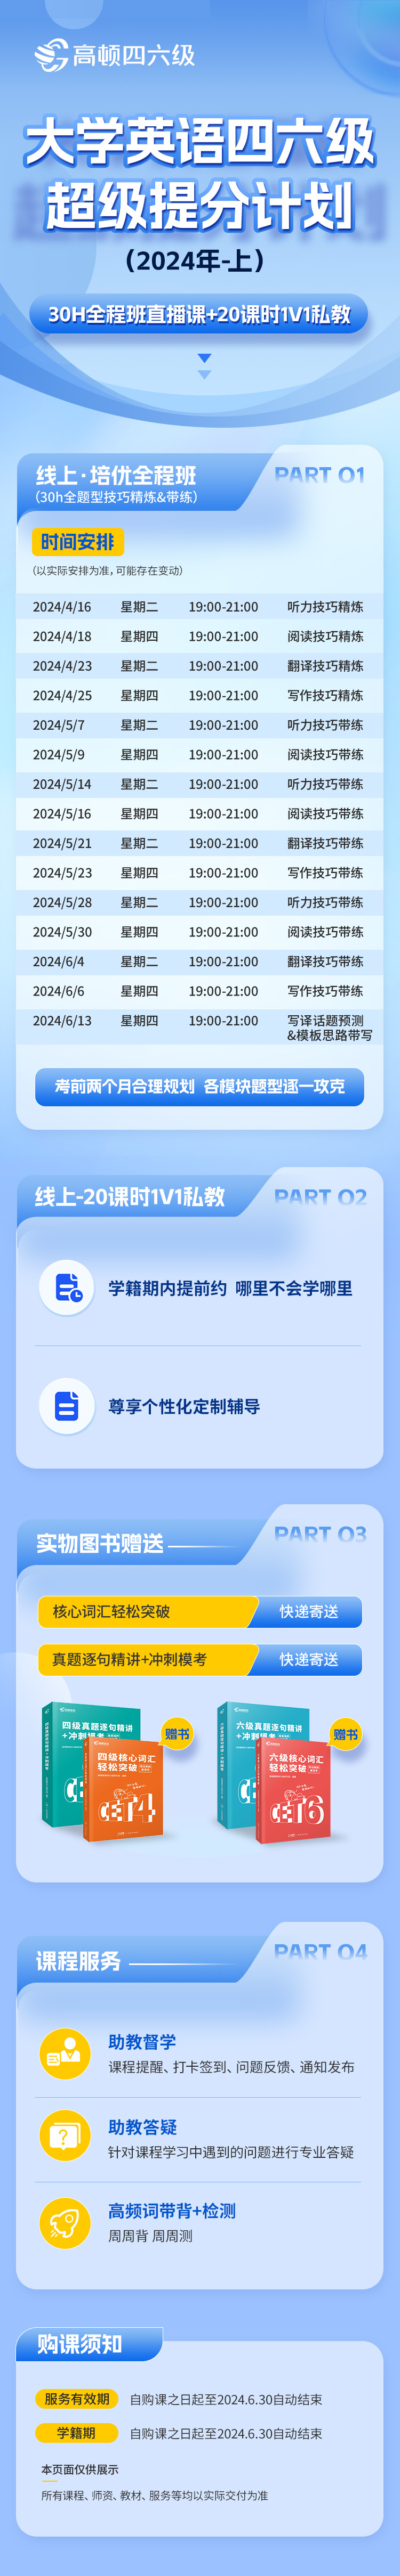 https://simg01.gaodunwangxiao.com/uploadfiles/product-center/202404/28/415aa_20240428112256.jpg